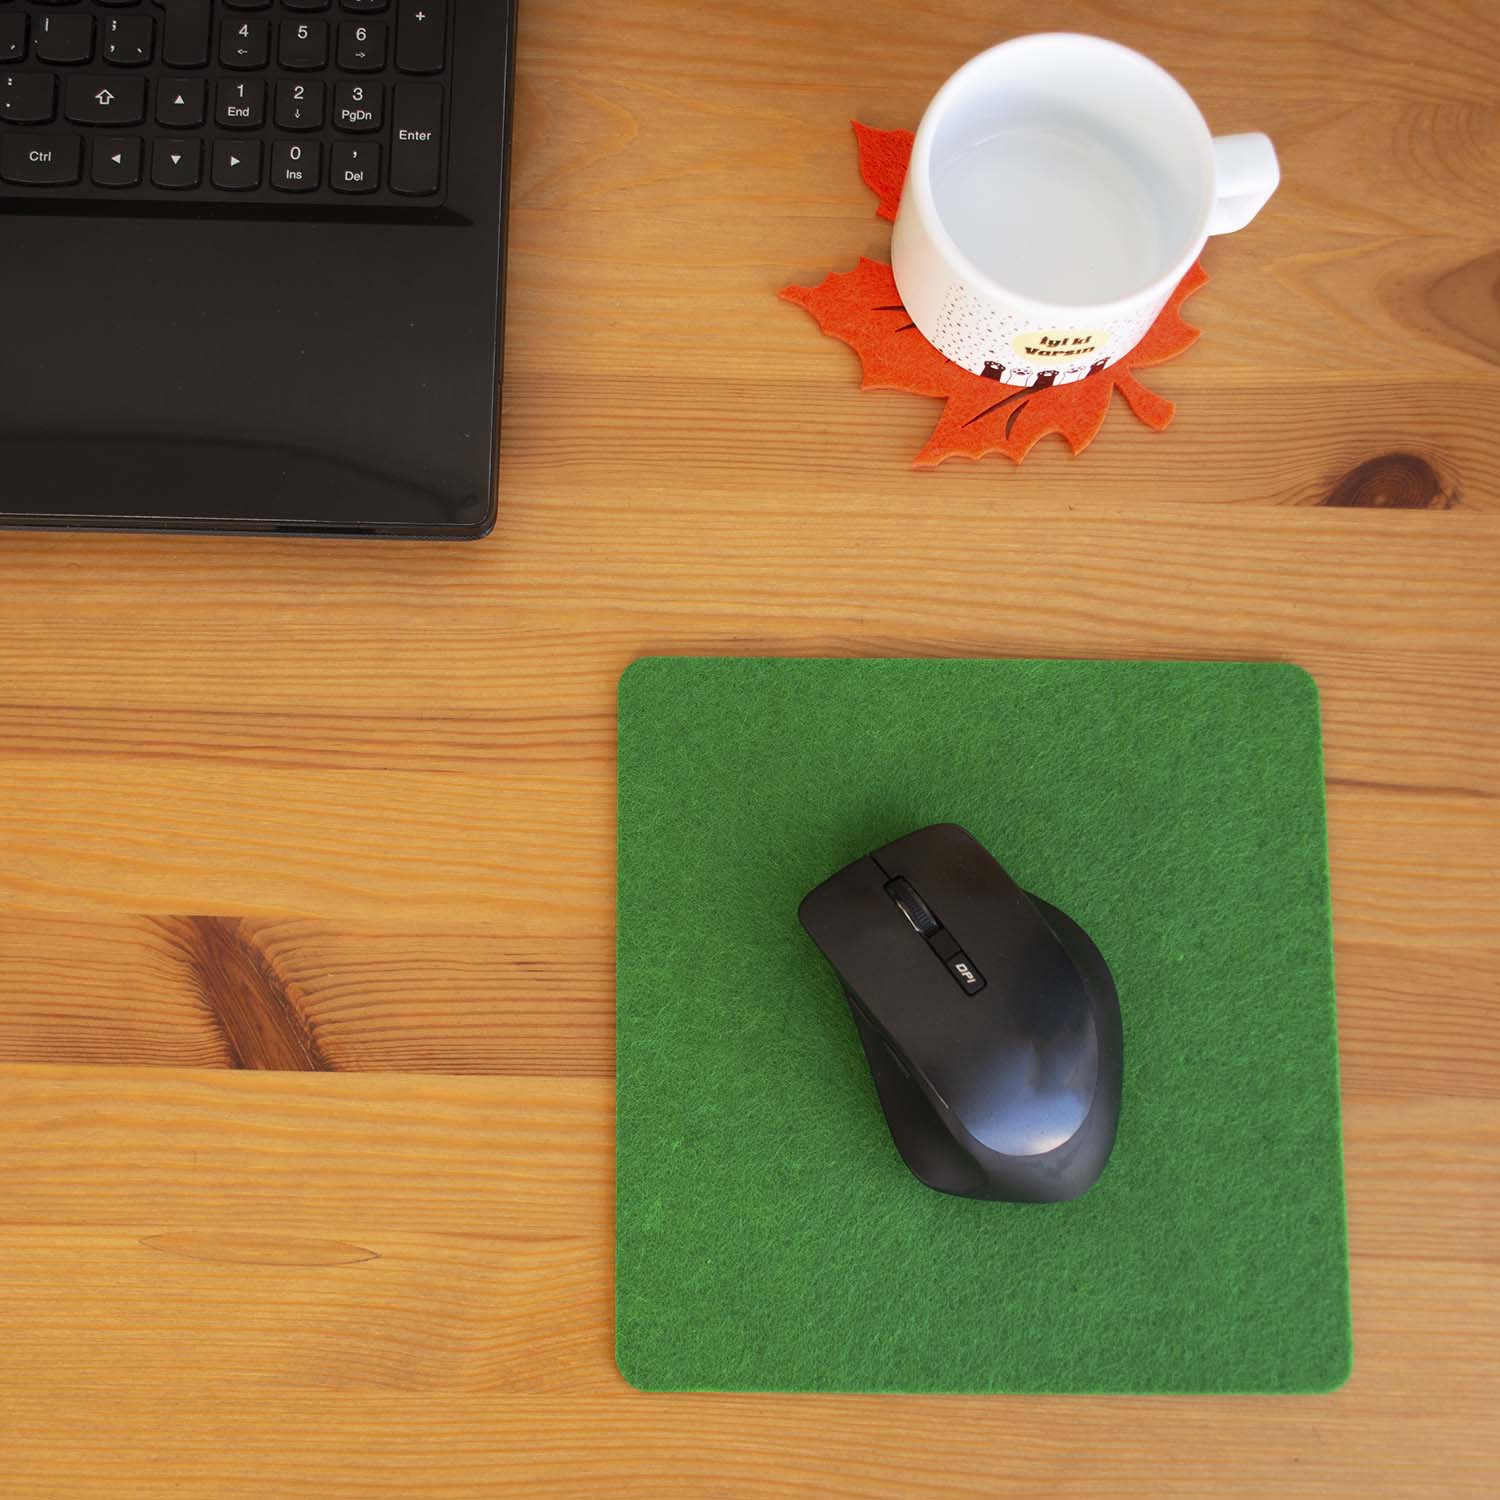 Yumuşak Dokulu Oyuncu ve Ofis Mouse Pad (Renk Seçmeli)